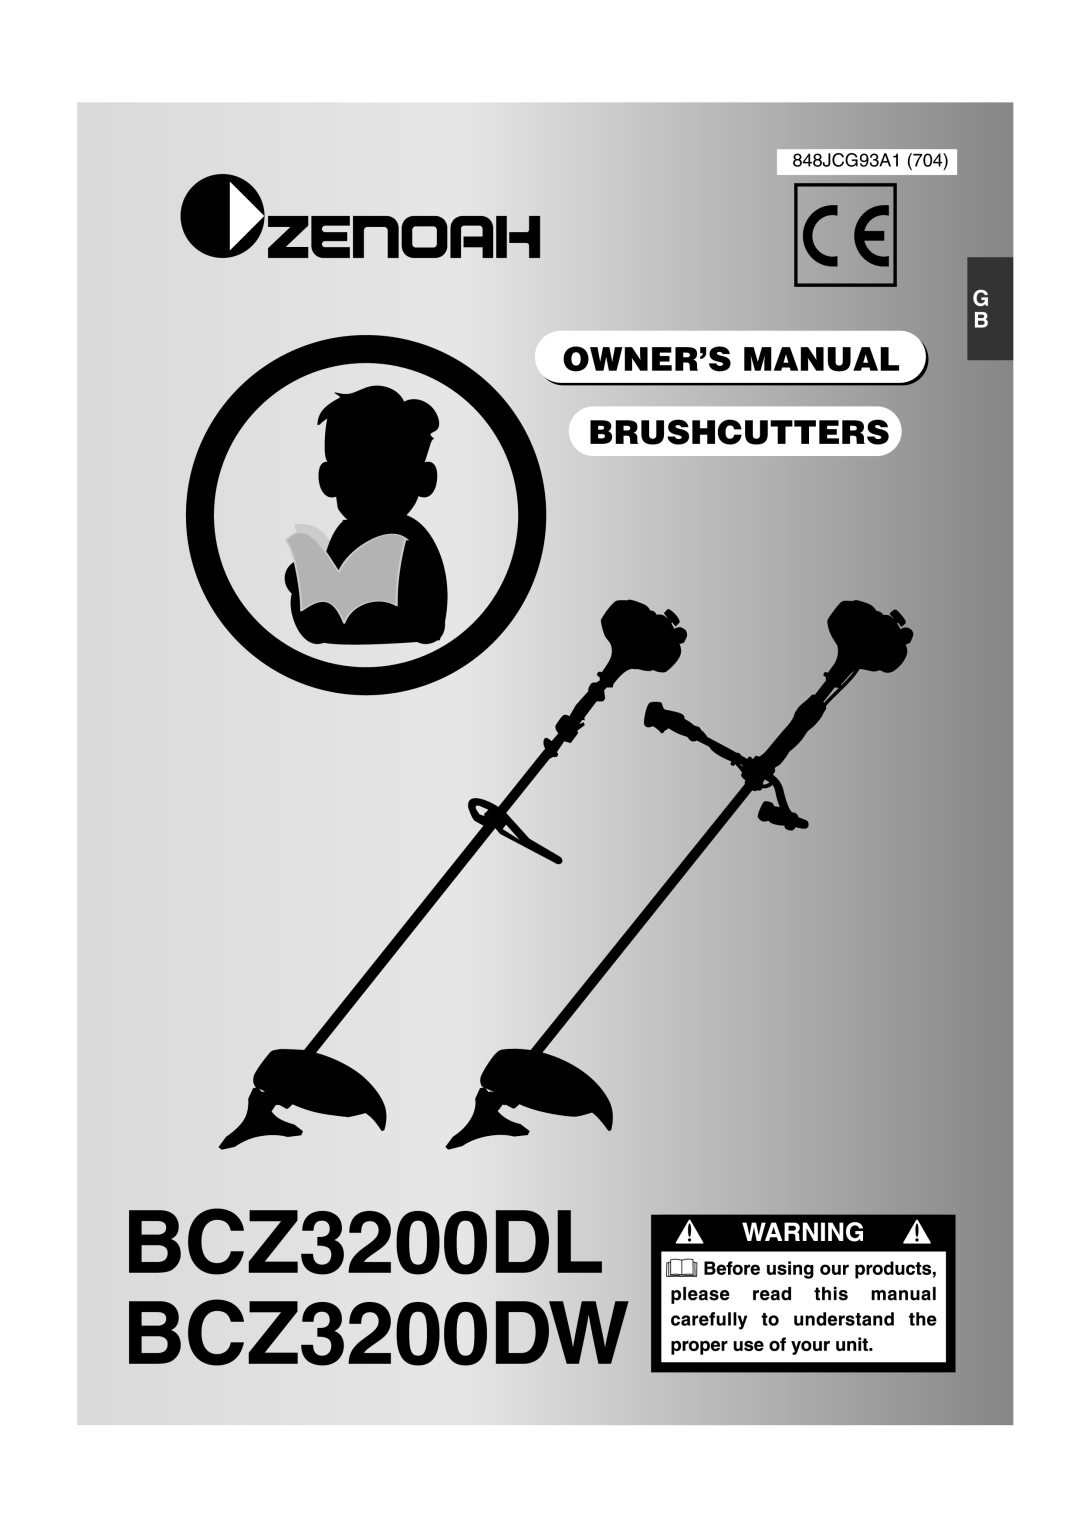 Zenoah owner manual BCZ3200DL BCZ3200DW, 848JCG93A1 